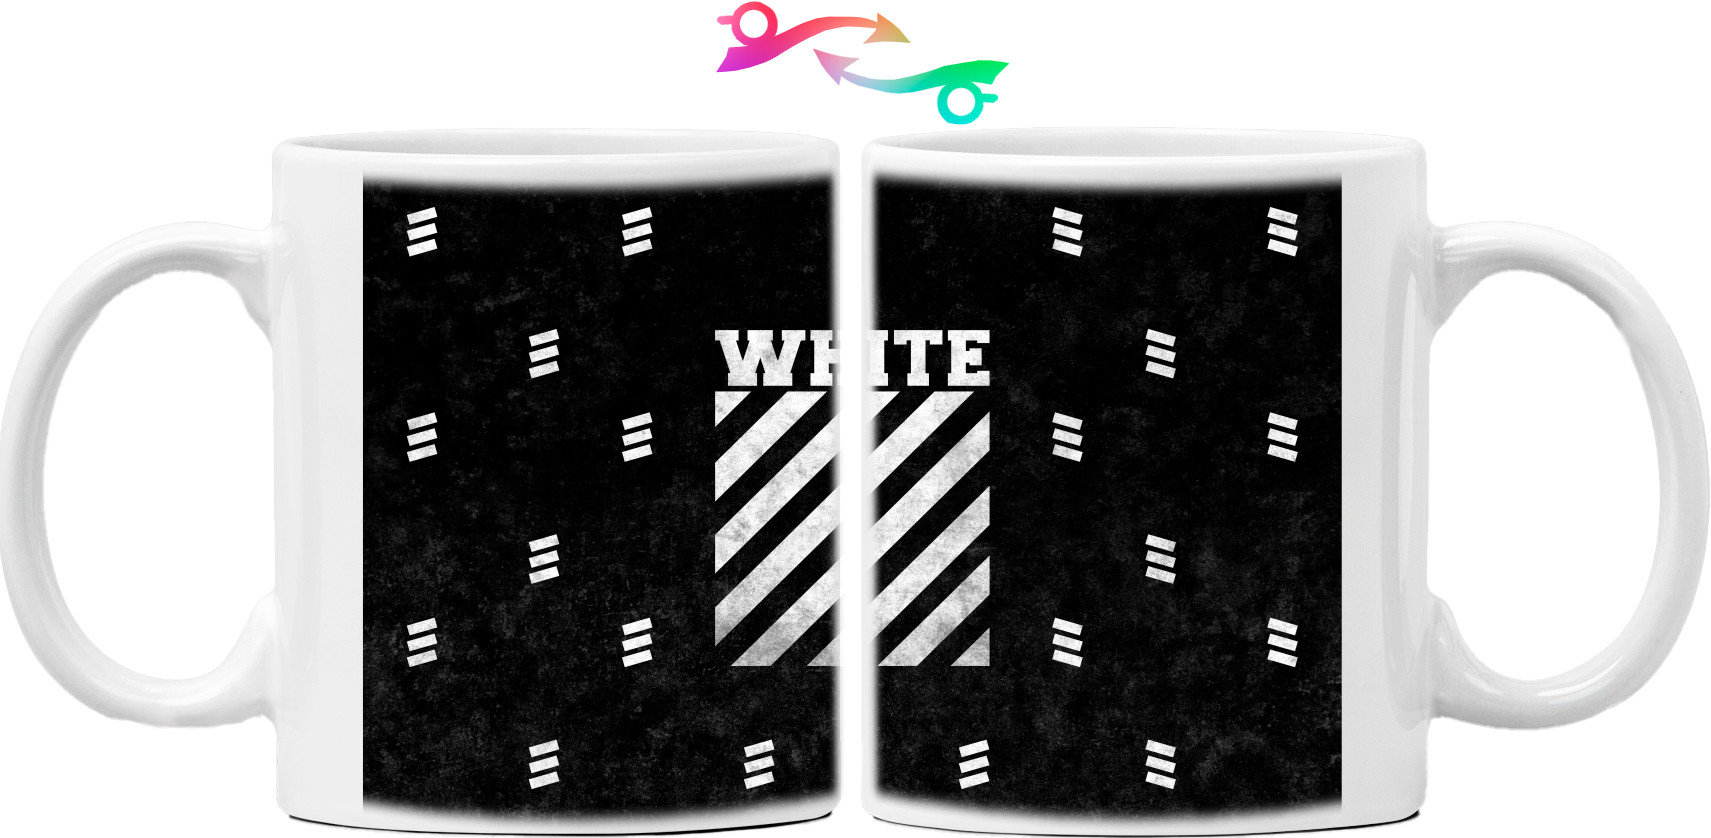 OFF WHITE (8)